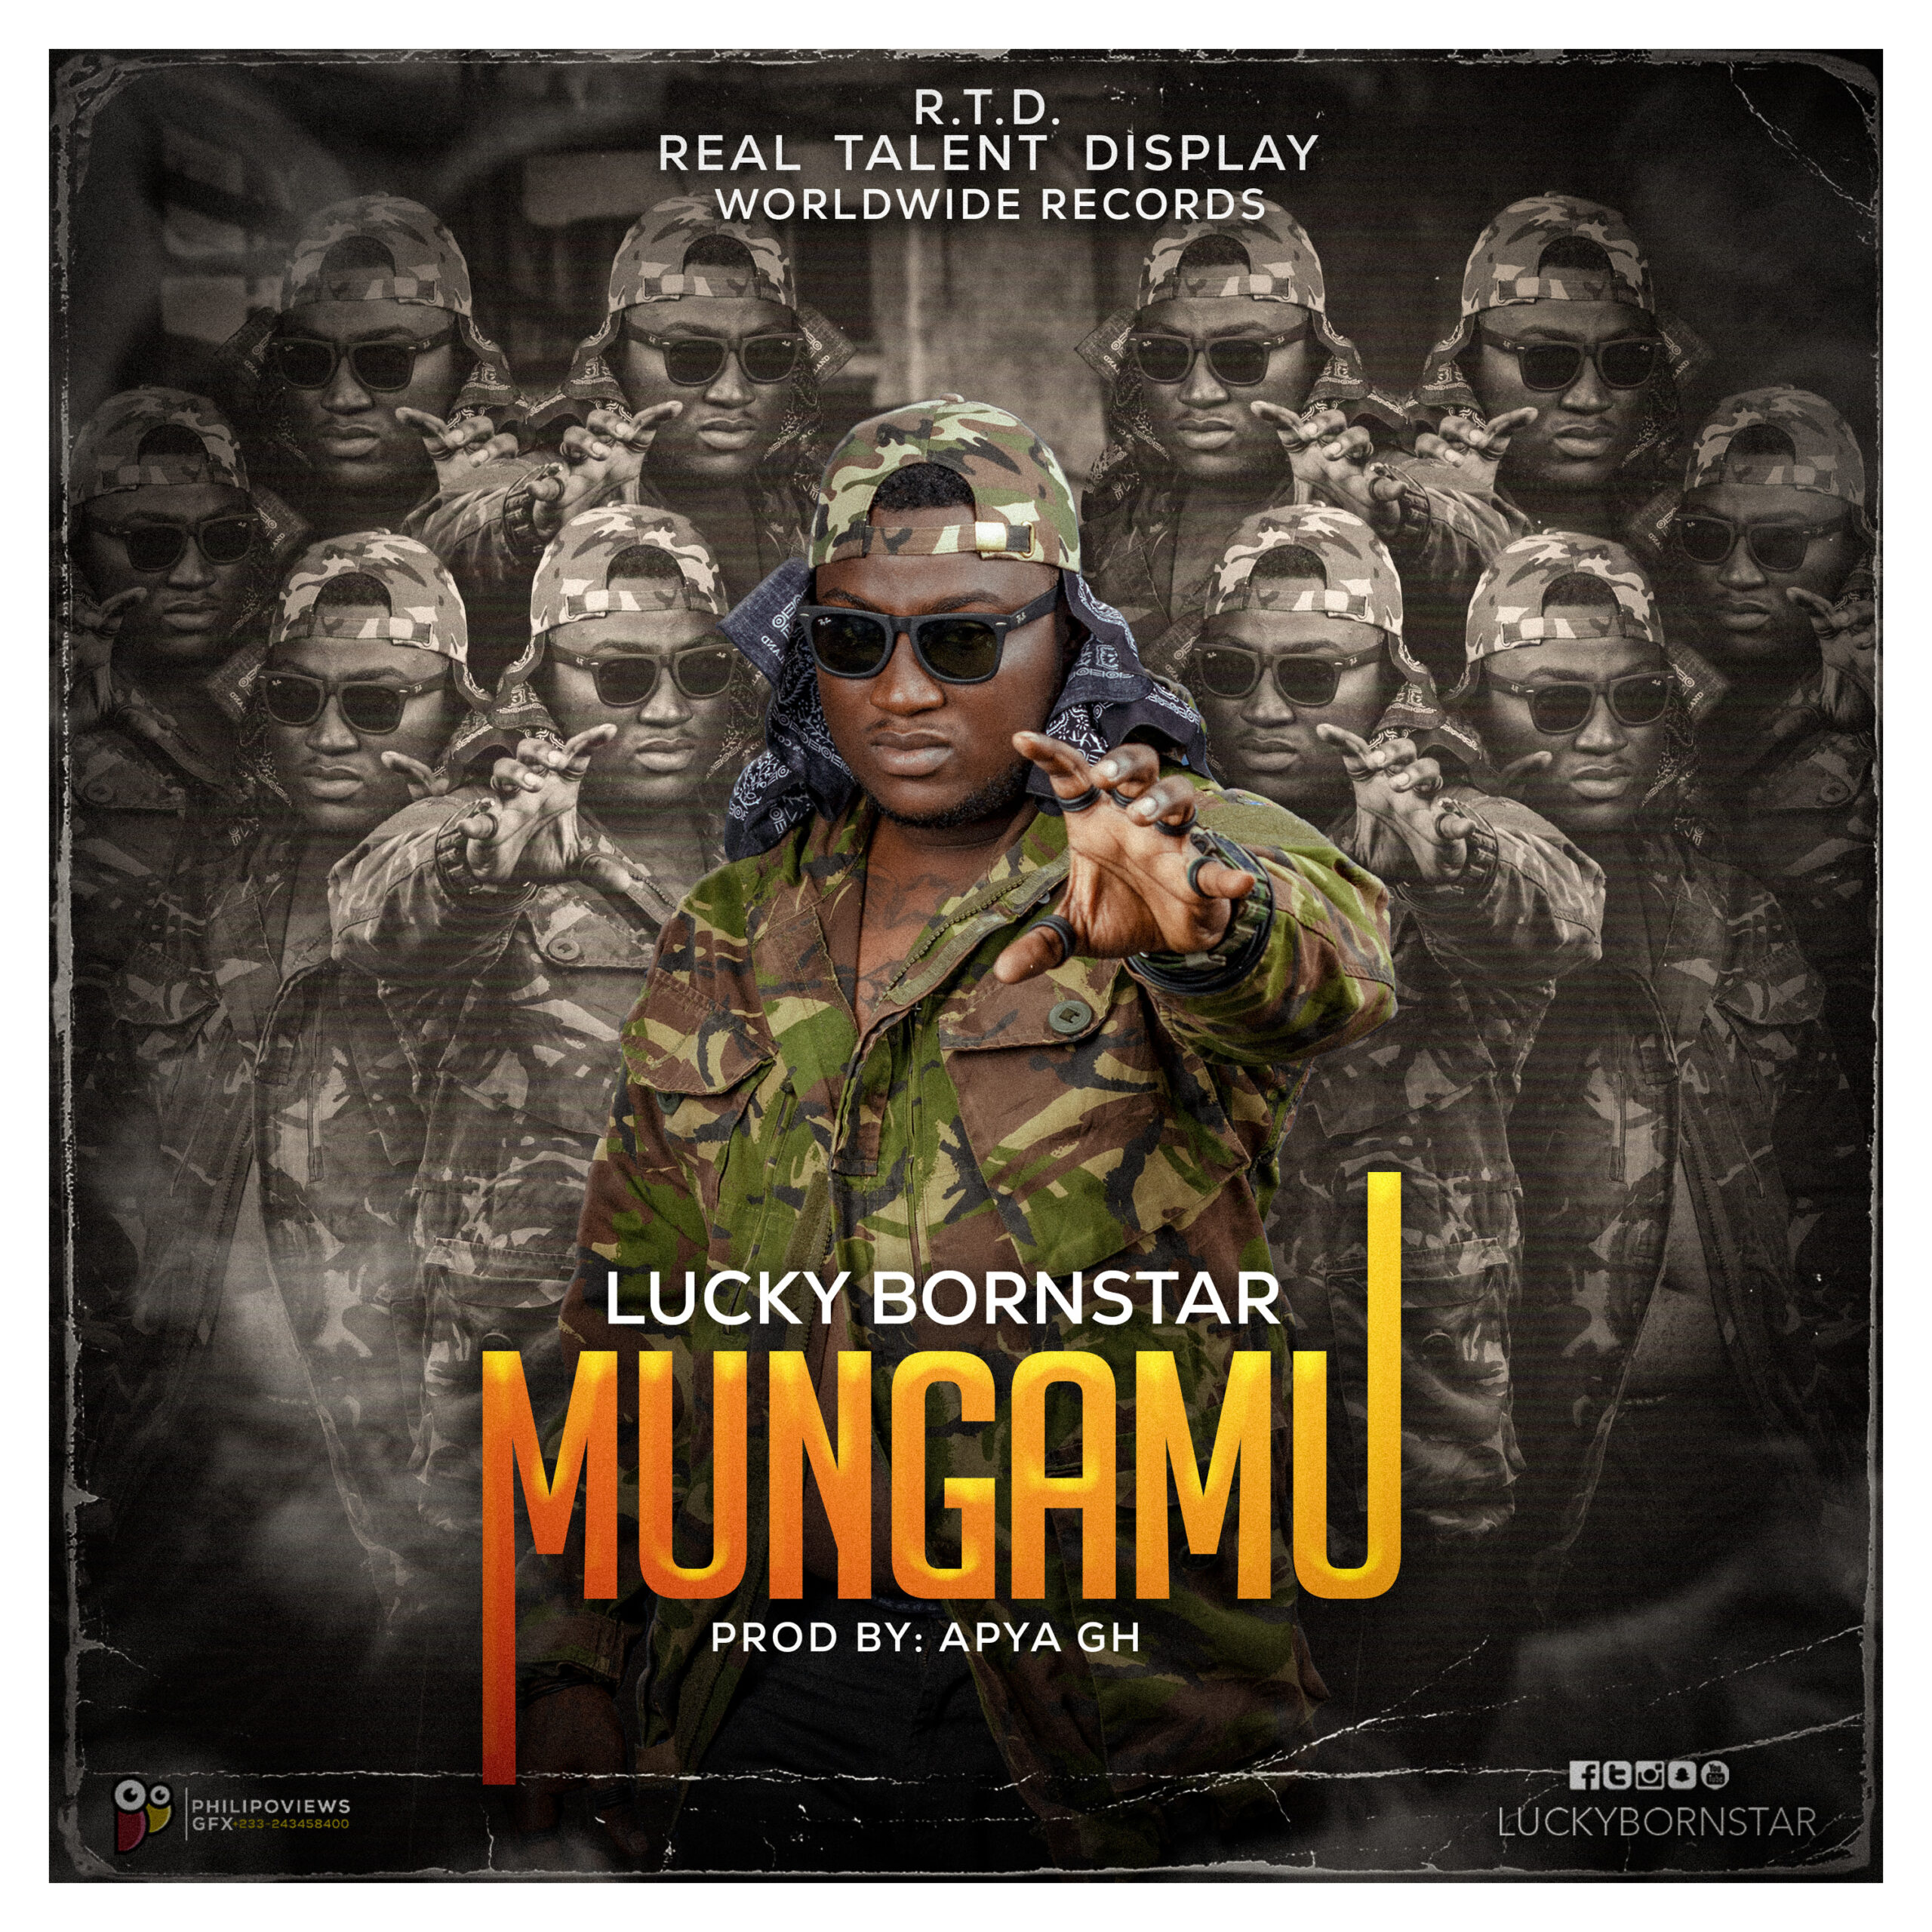 Lucky Bornstar Mungamu scaled